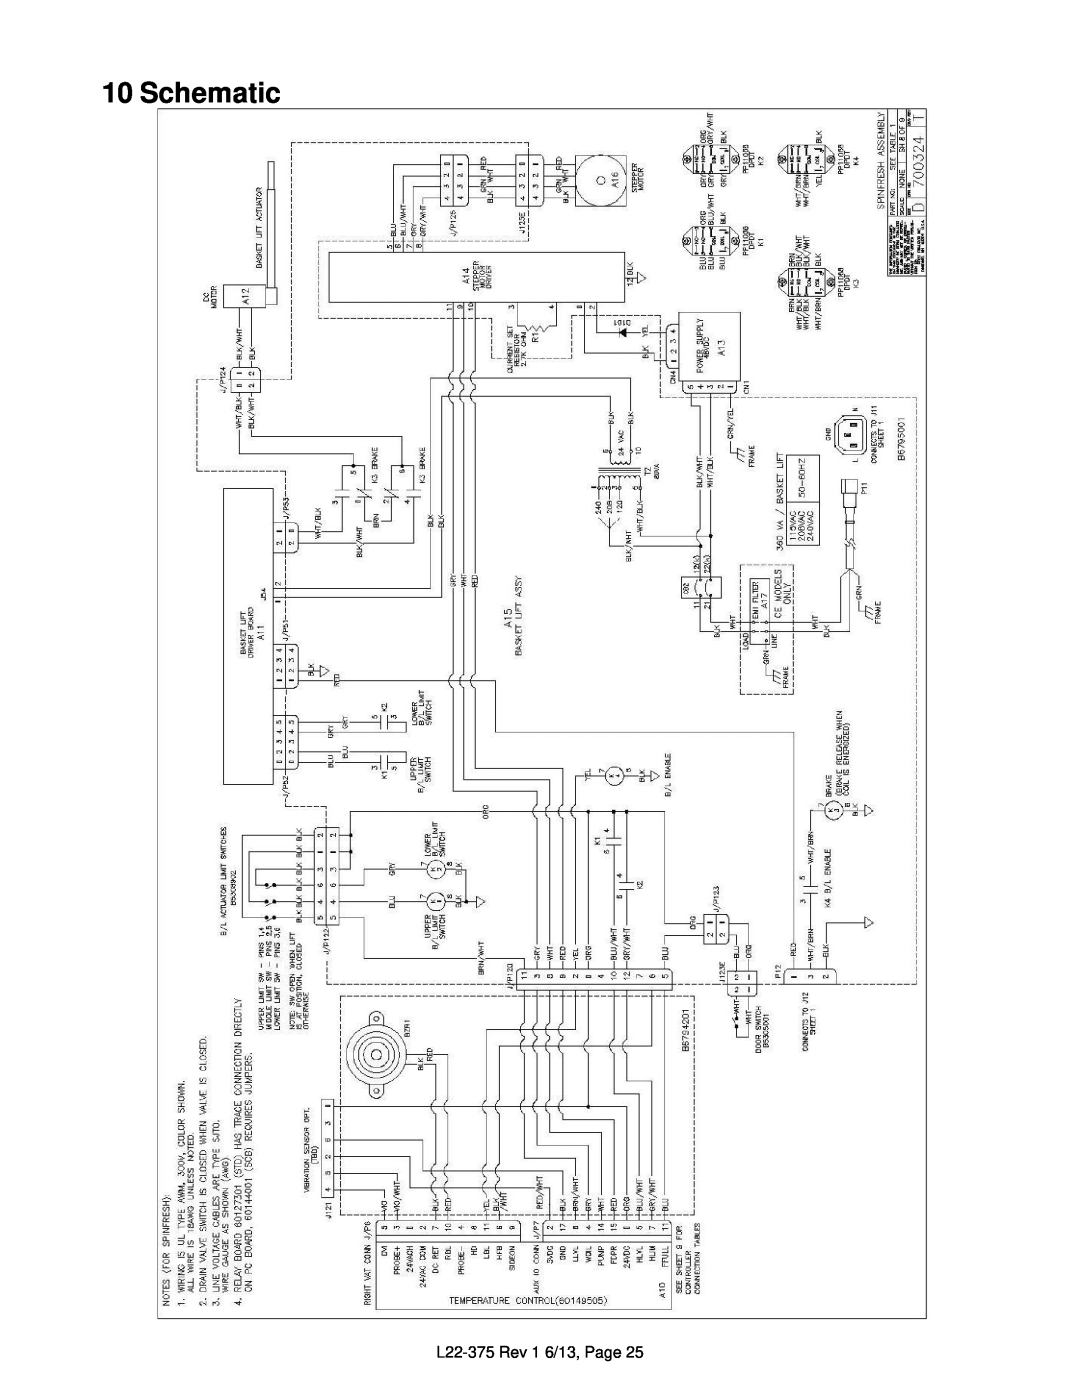 Pitco Frialator manual Schematic, L22-375 Rev 1 6/13, Page 